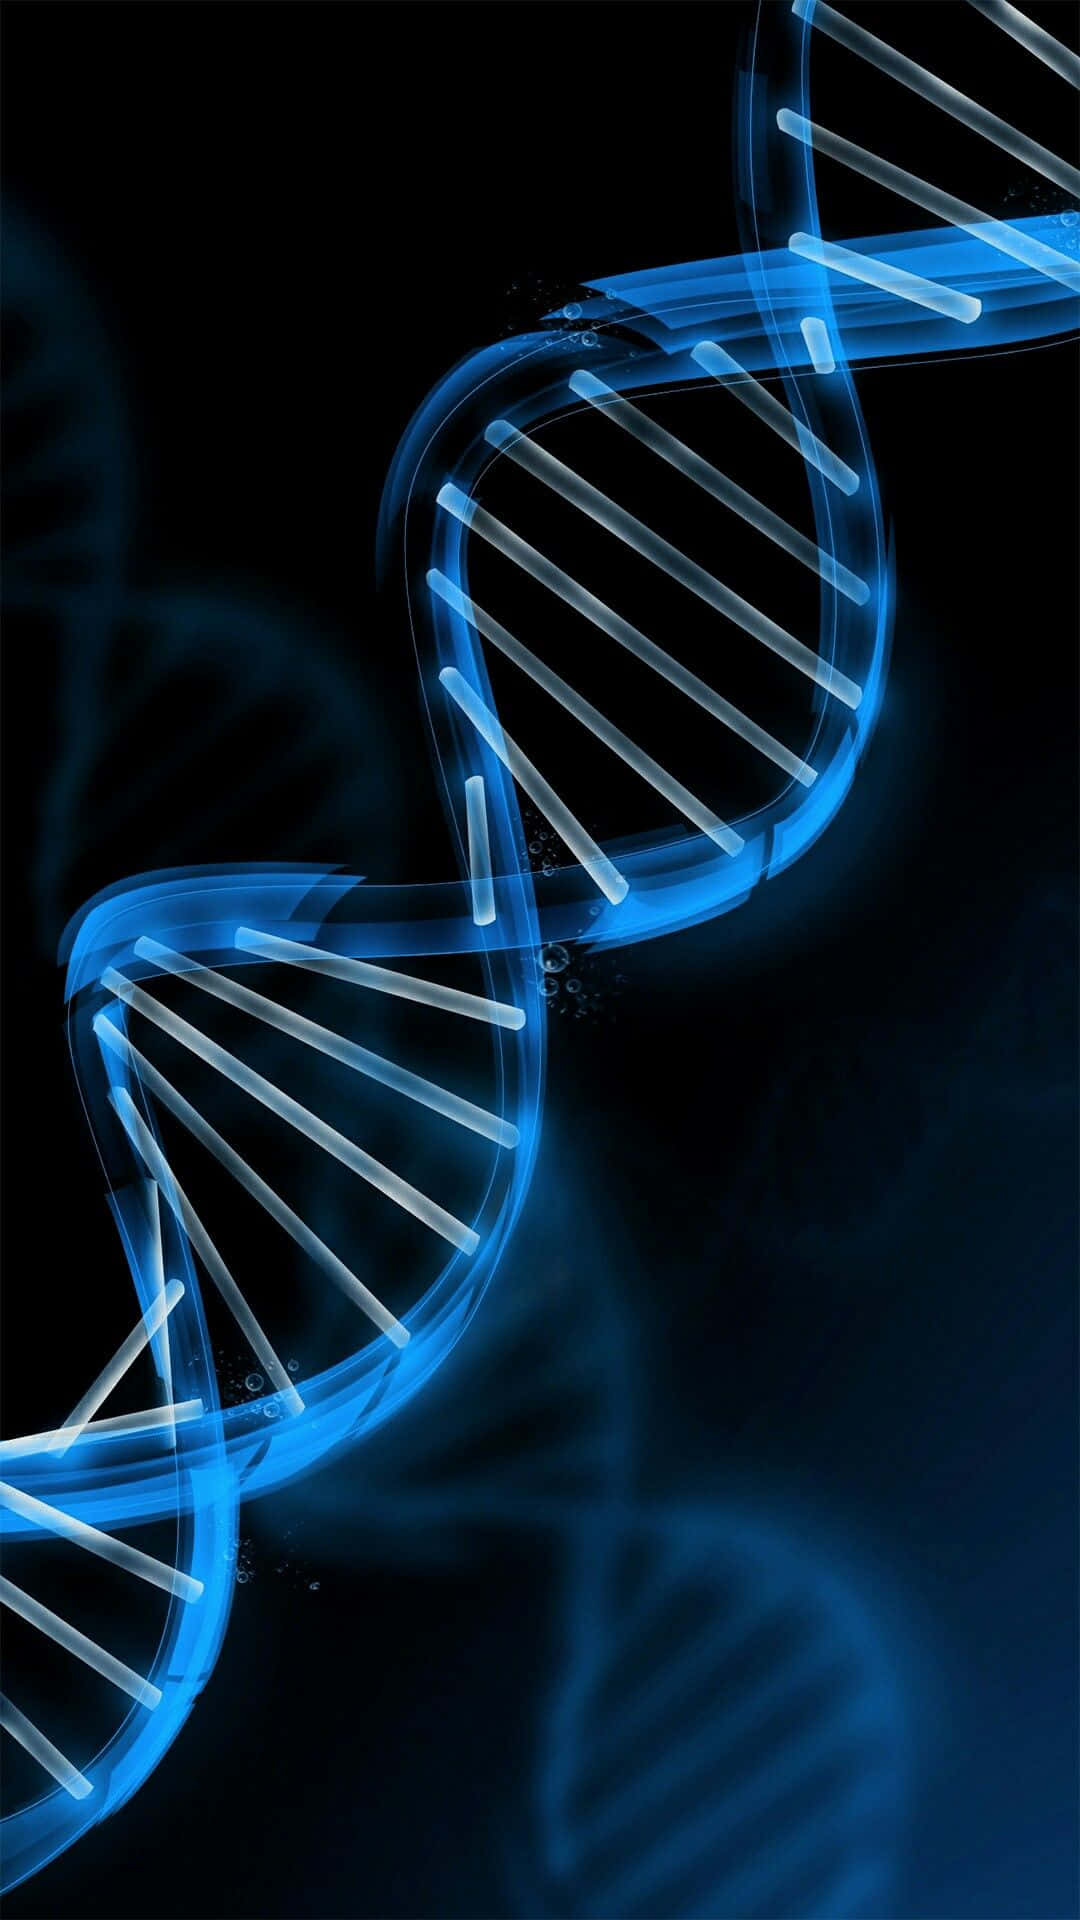 The Dance Of Life - DNA Molecule